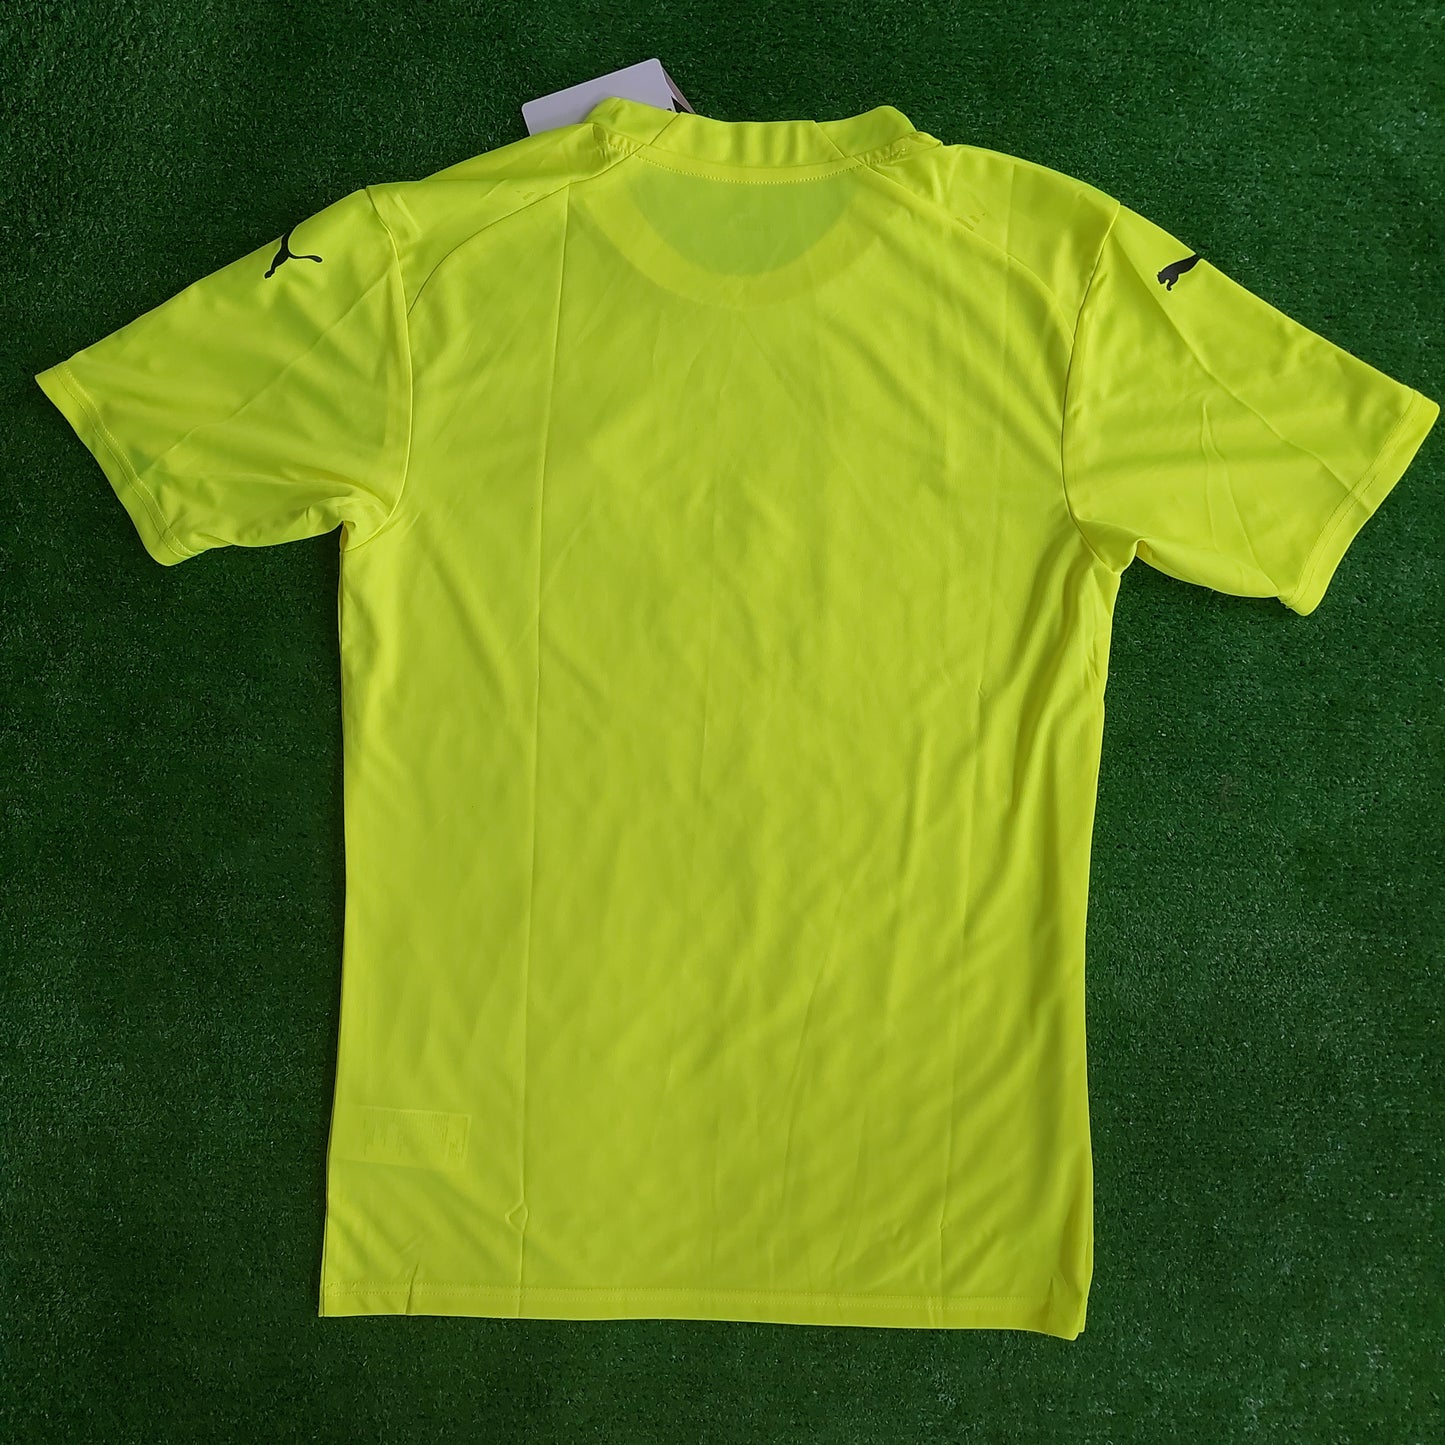 Swindon Town 2022/23 Goalkeeper/GK Shirt (BNWT) - Size M